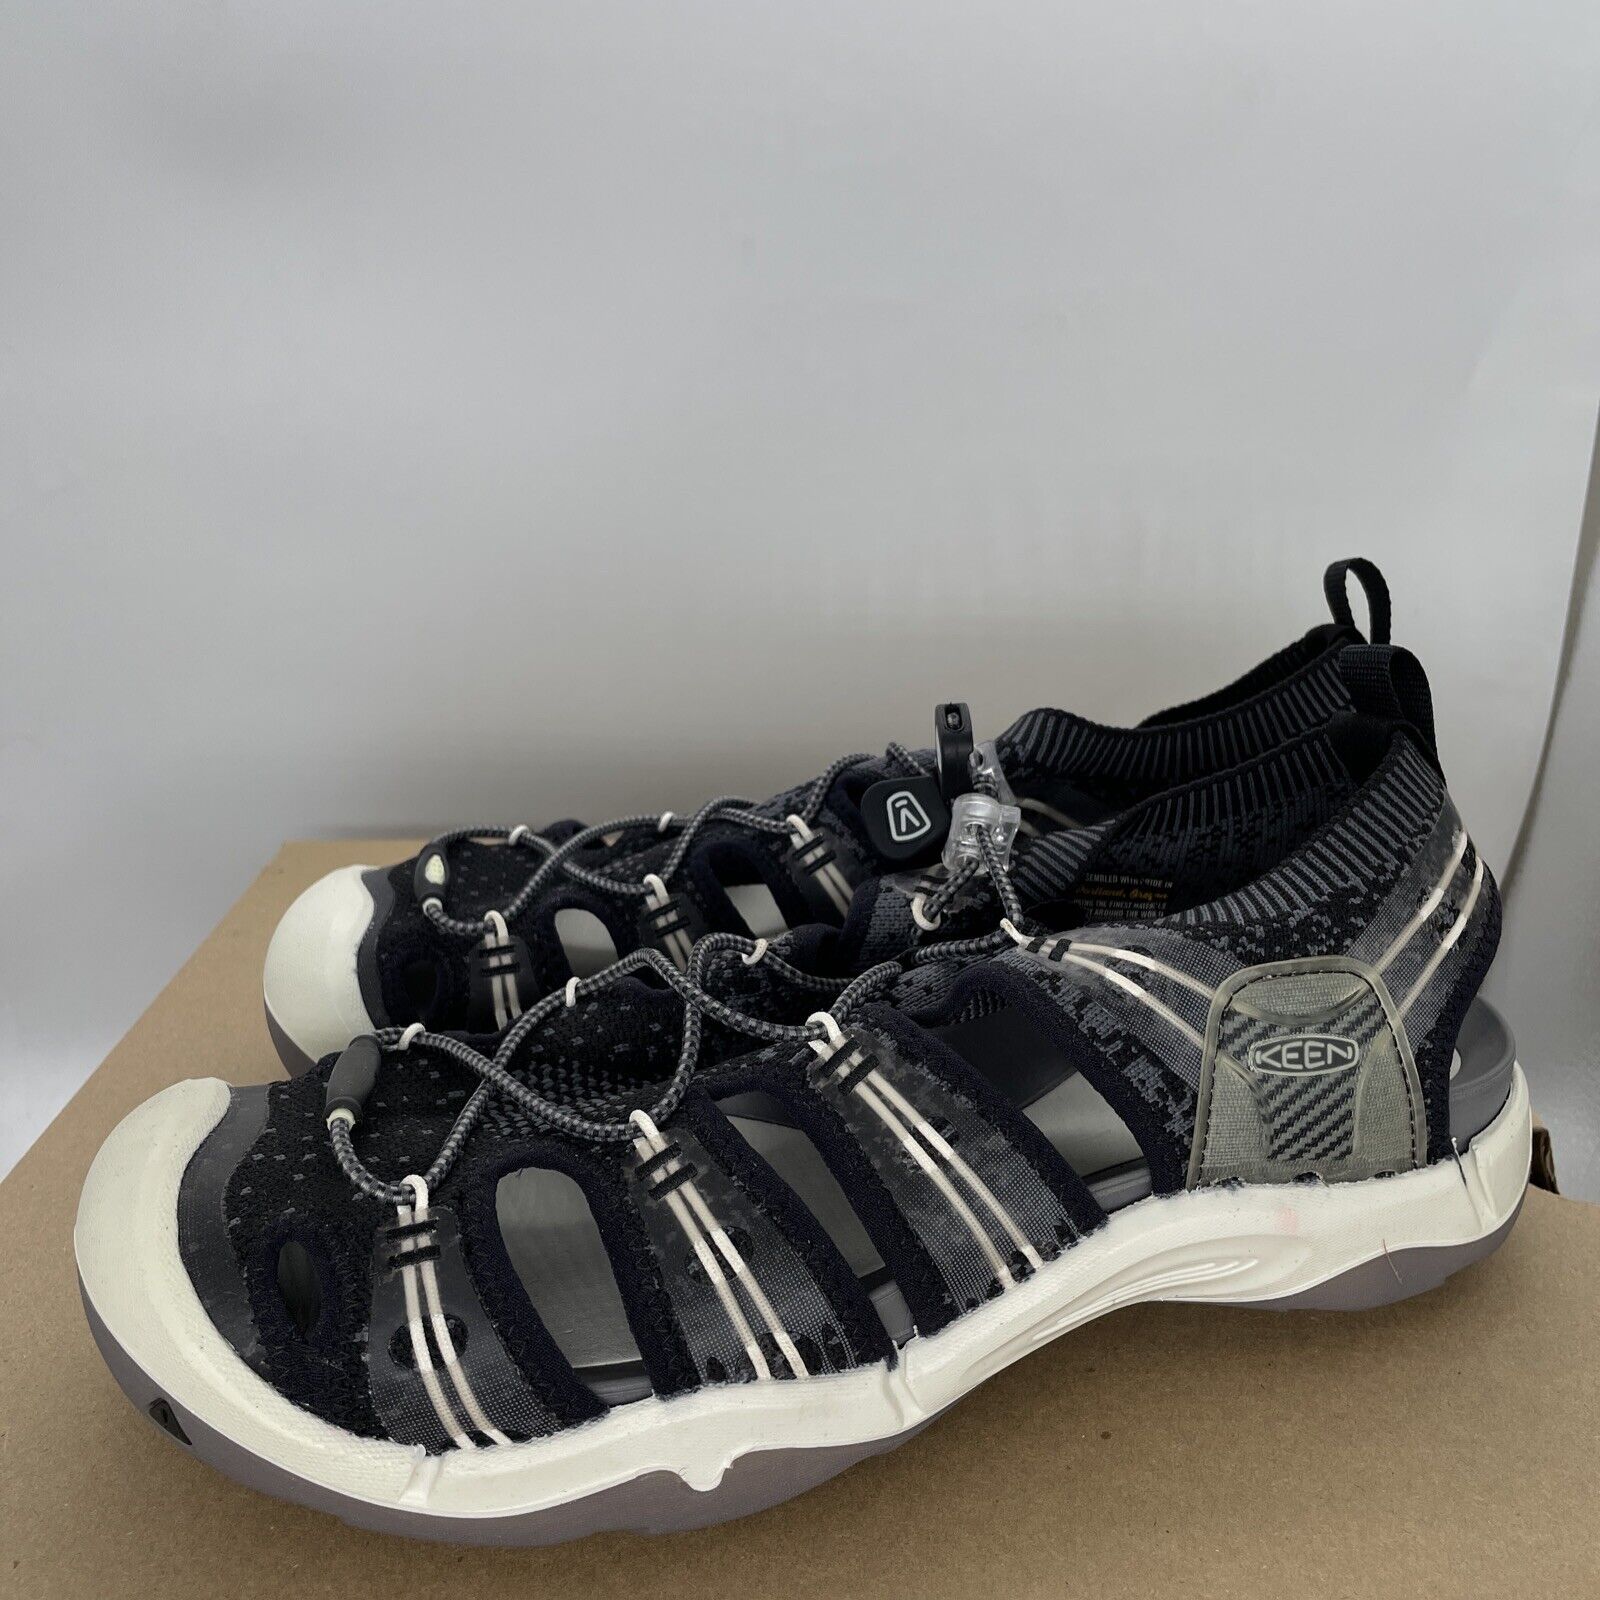 Keen Mens Evo Fit One Black/white Sandal Size 10.5 Brand New NIB